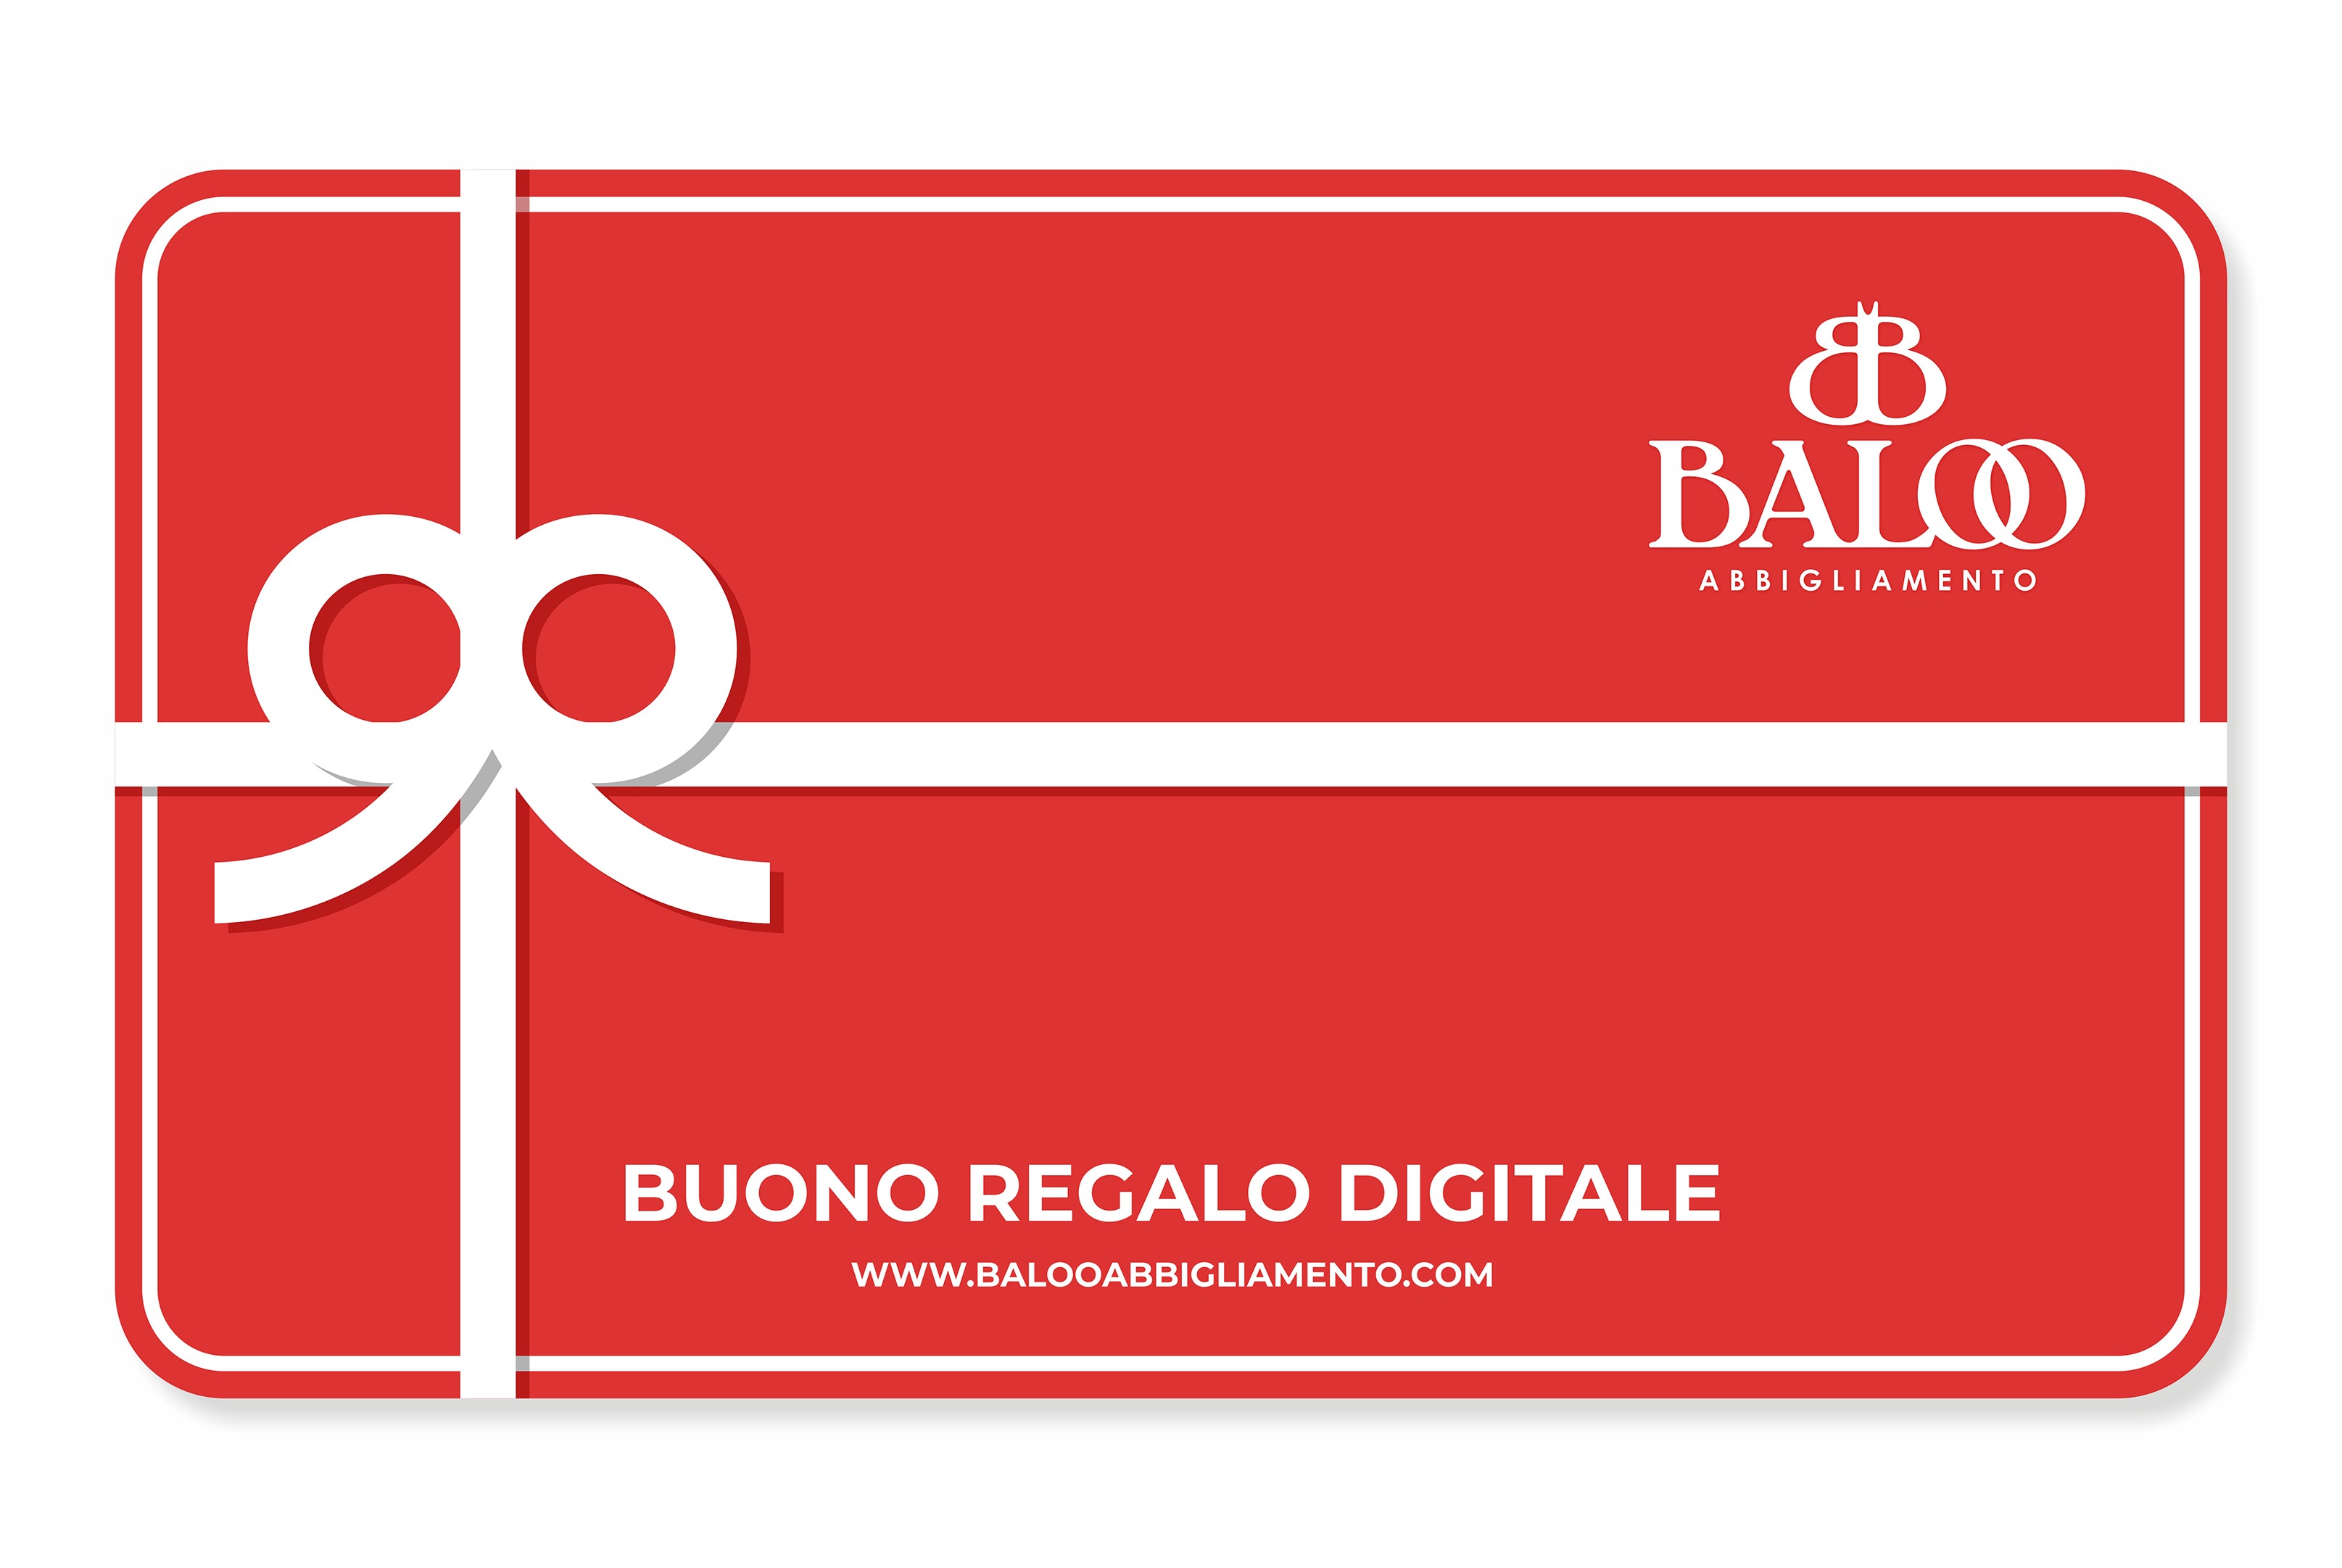  Buono Regalo  - Digitale - Logo  - Blu